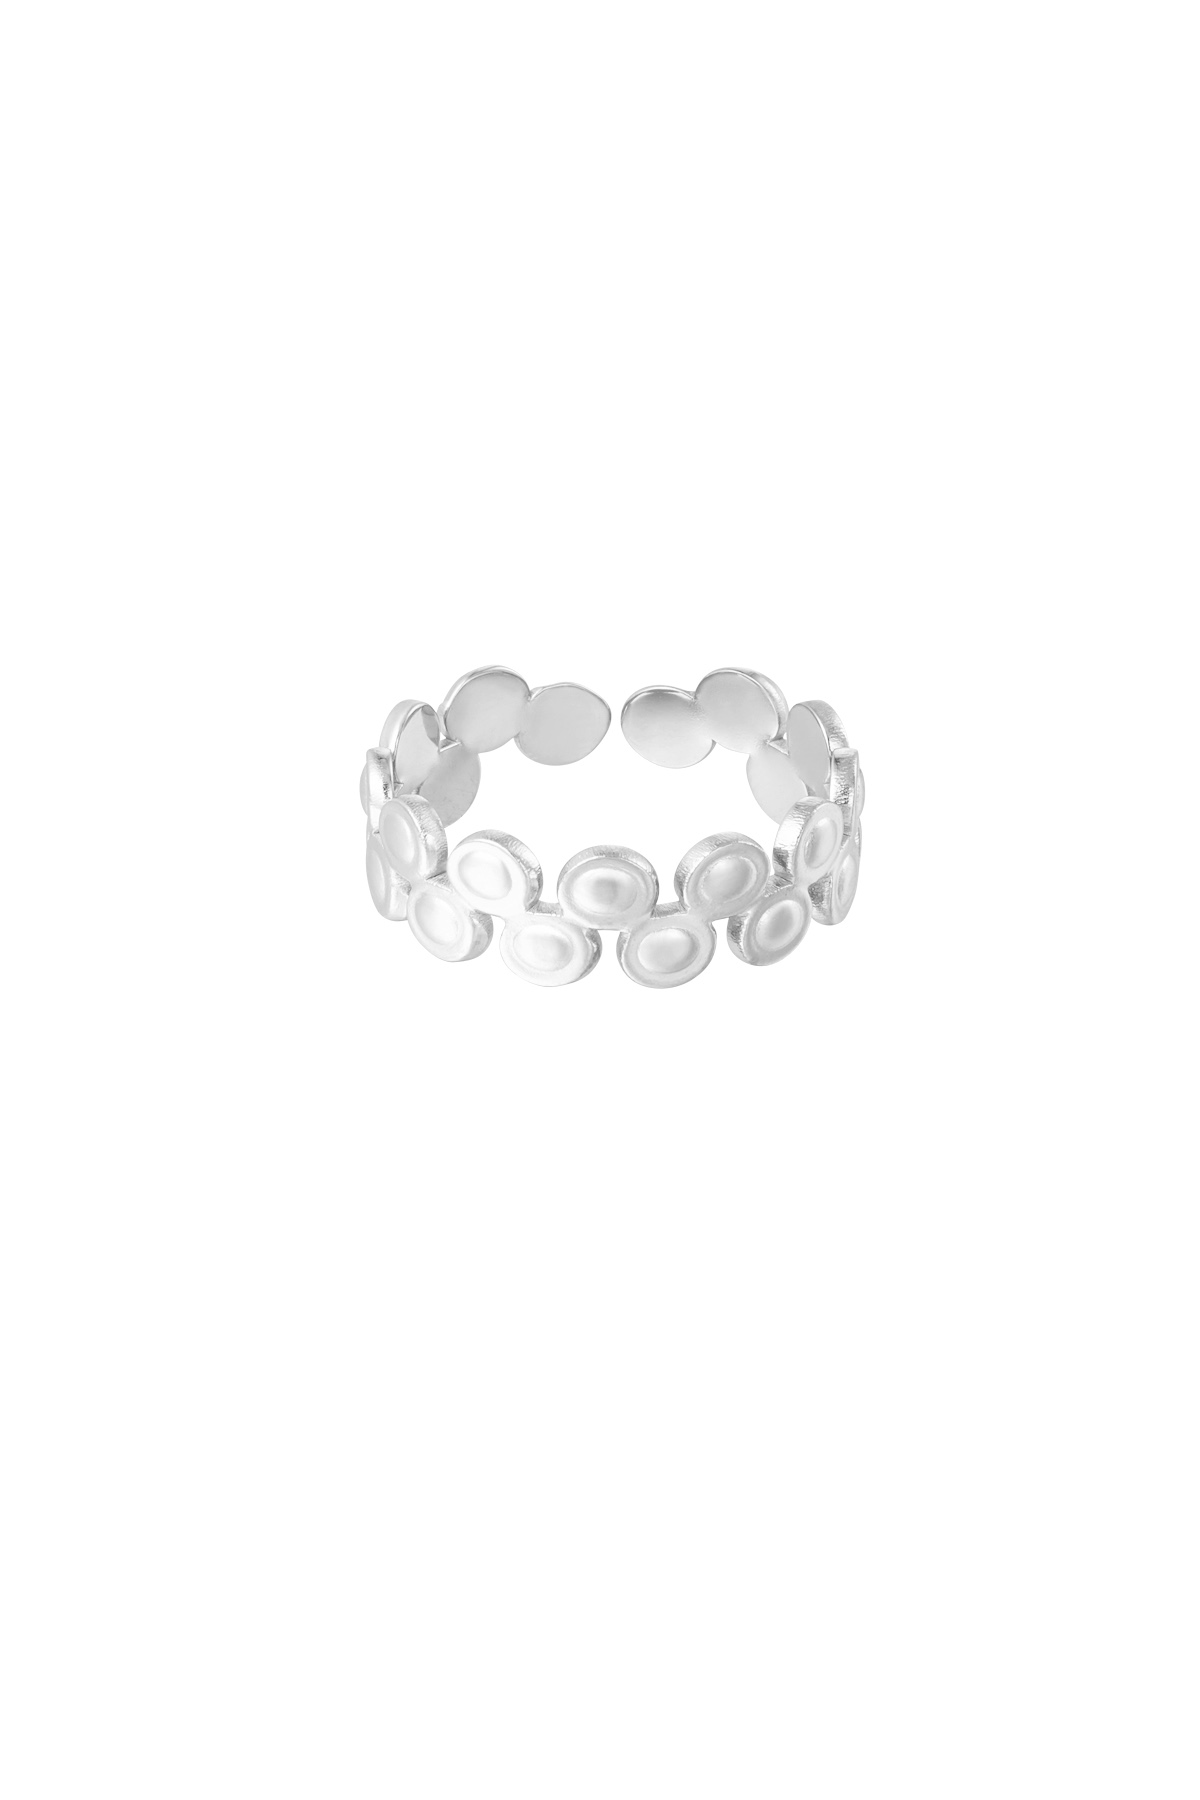 Ring barok - zilver h5 